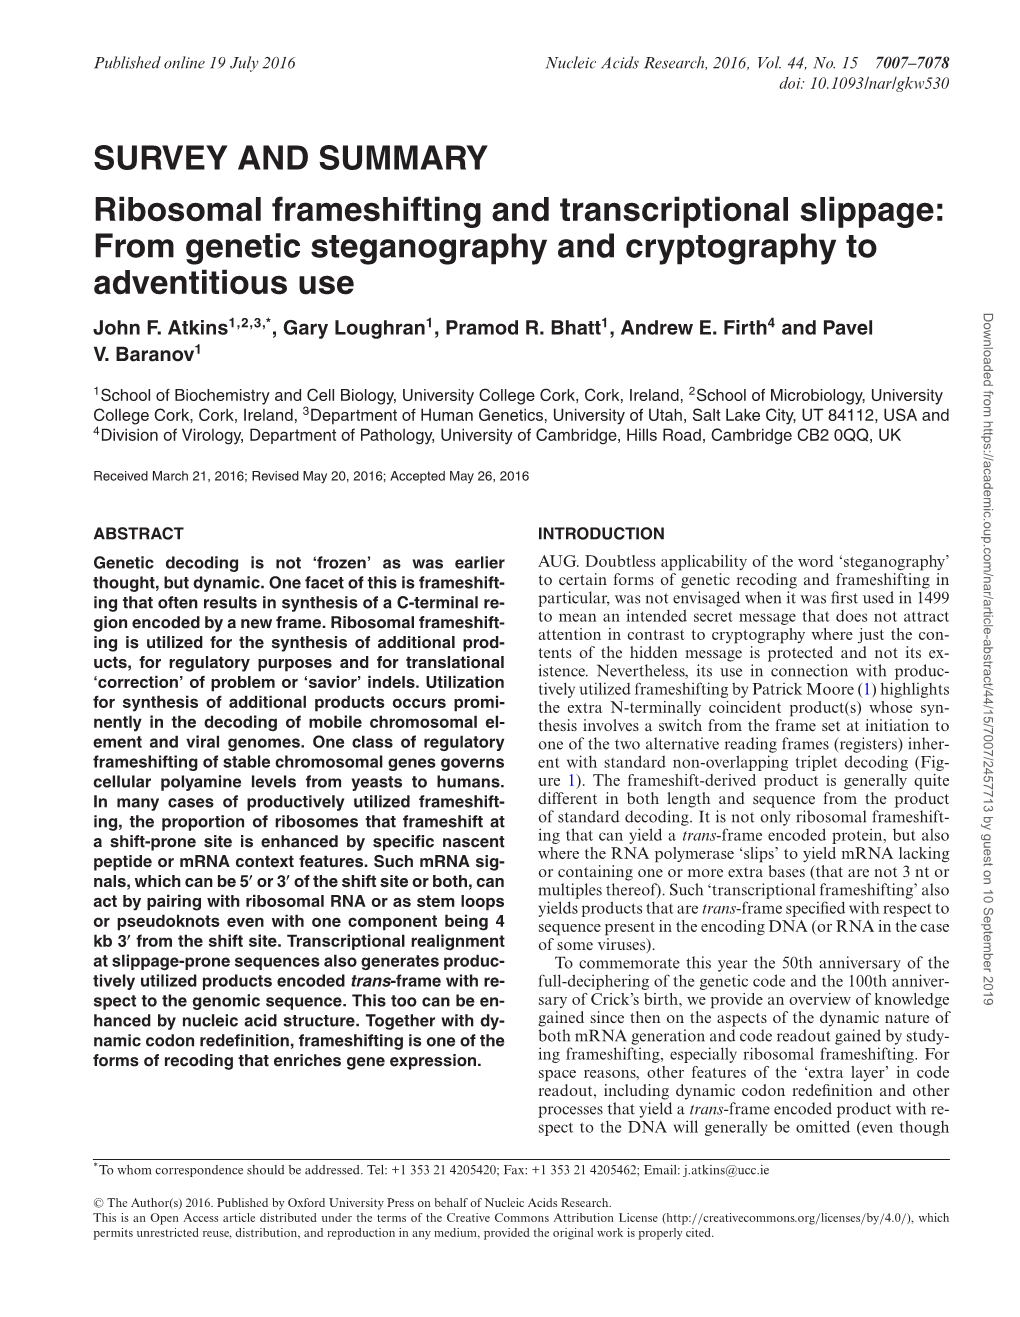 Ribosomal Frameshifting and Transcriptional Slippage